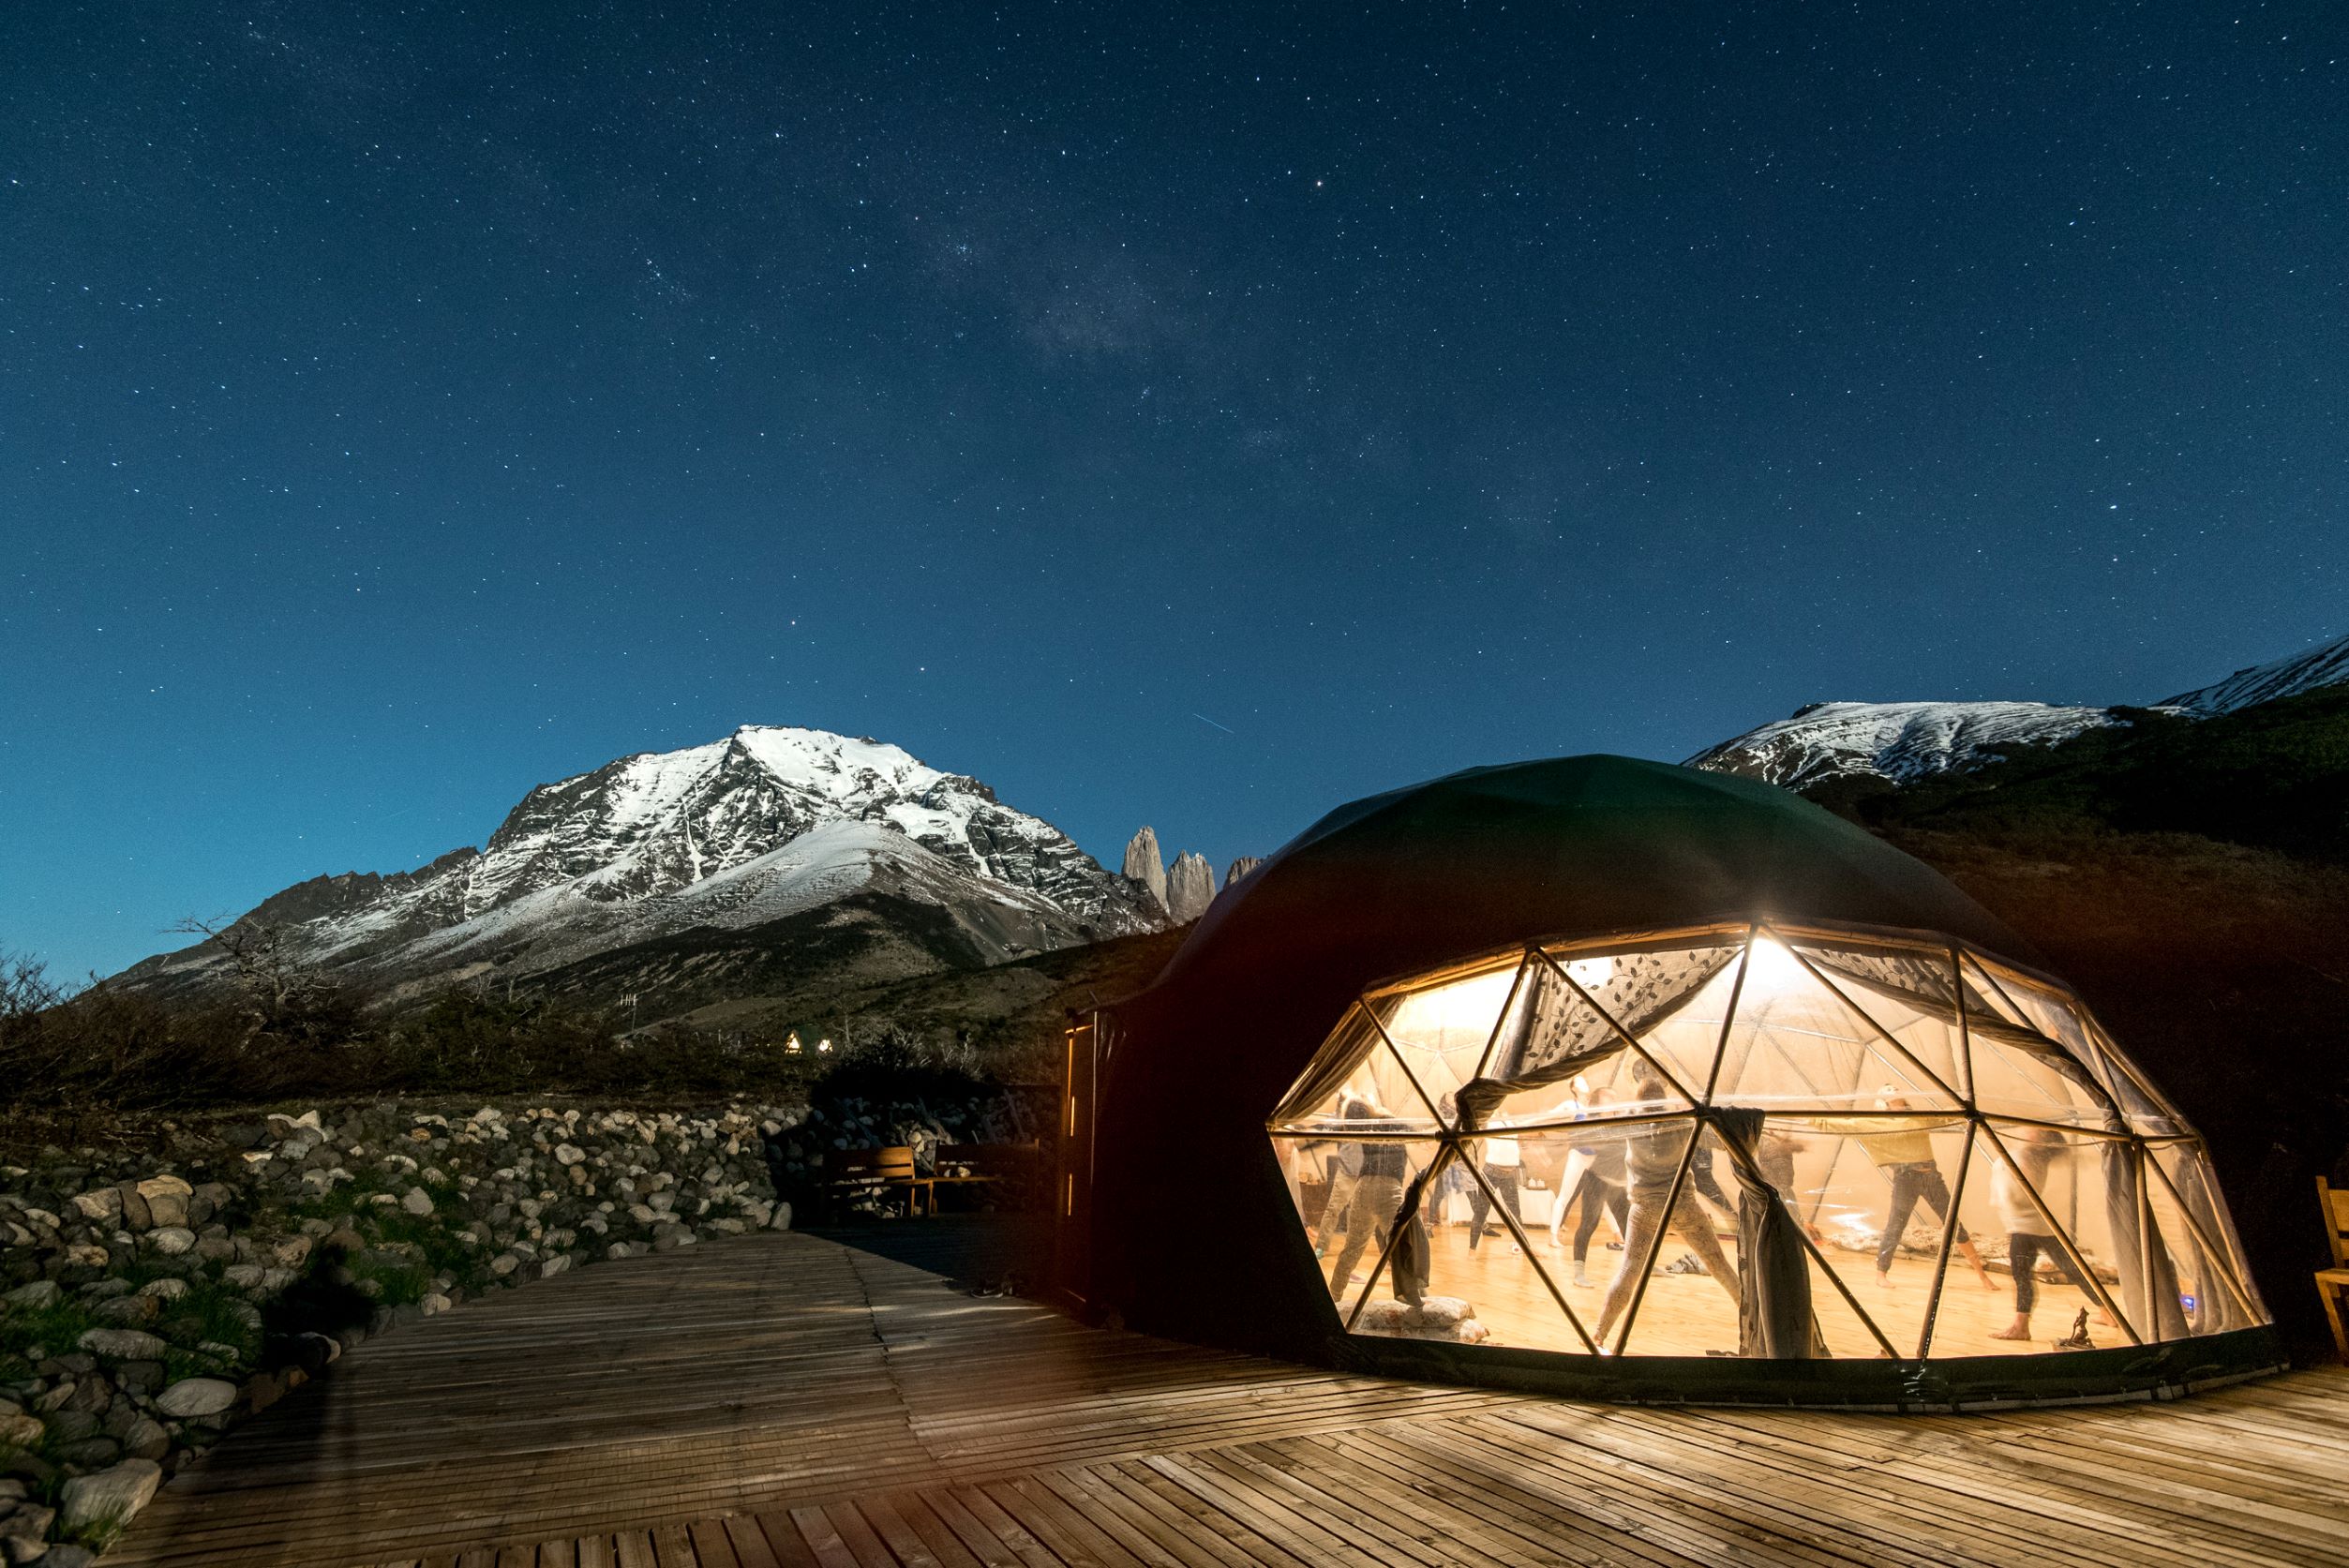 EcoCamp Patagonia 也特別規劃有瑜珈帳篷，讓遊客能來此體驗融入原始自然天地的瑜珈養生課程。